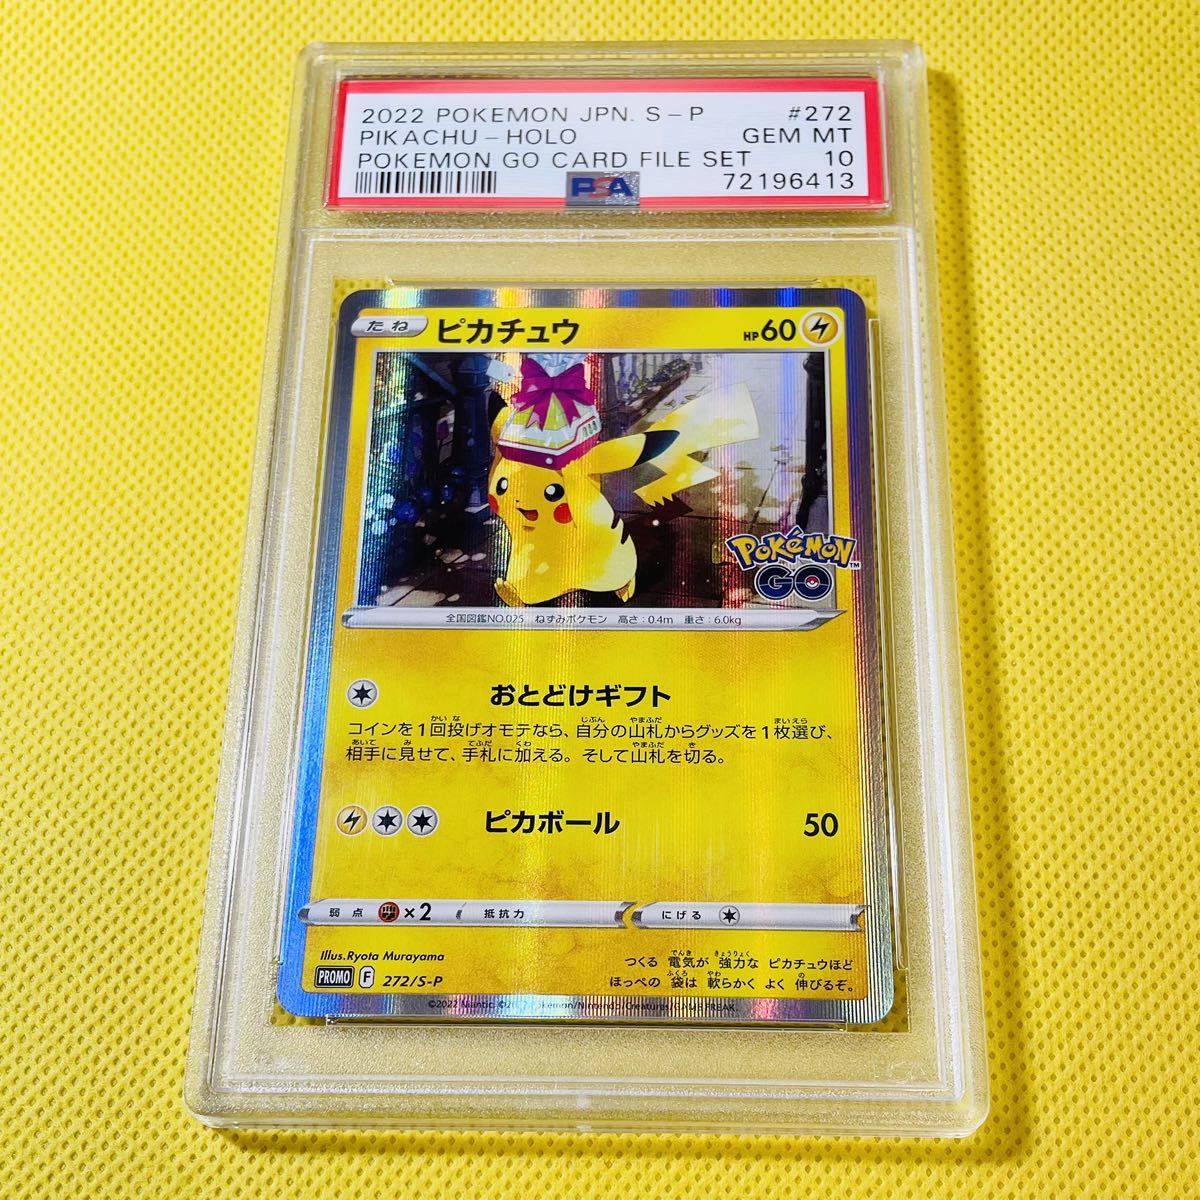 ★PSA10★GEM MINT【ピカチュウ/ポケモンGO/プロモ/PROMO】2022 Pikachu-Holo 272/S-P【ポケカ/Pokemon Cards】Pokemon Go Card File Set